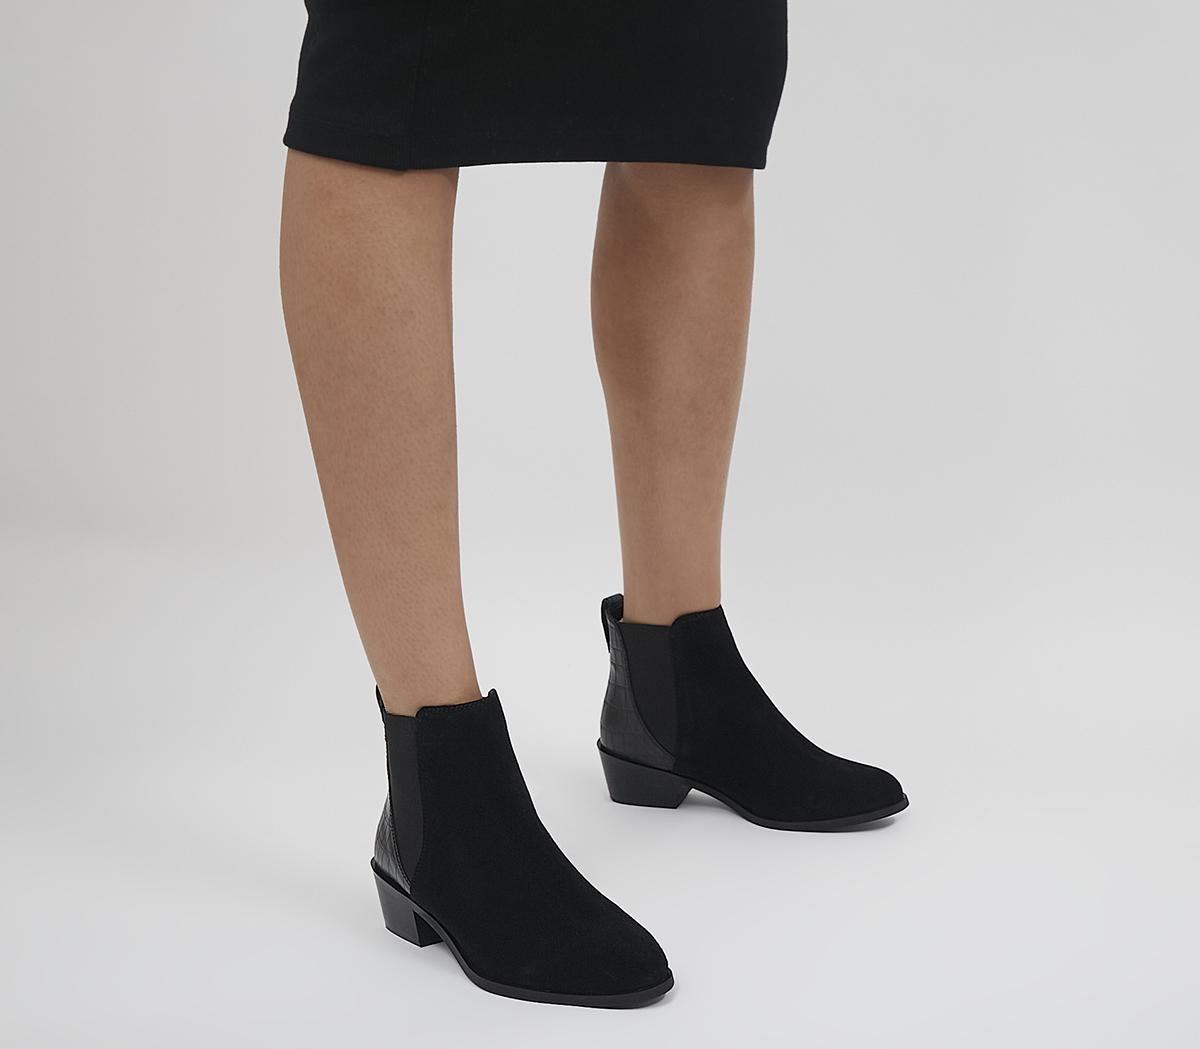 OfficeArkansas Almond Toe Chelsea Ankle BootsBlack Suede Leather